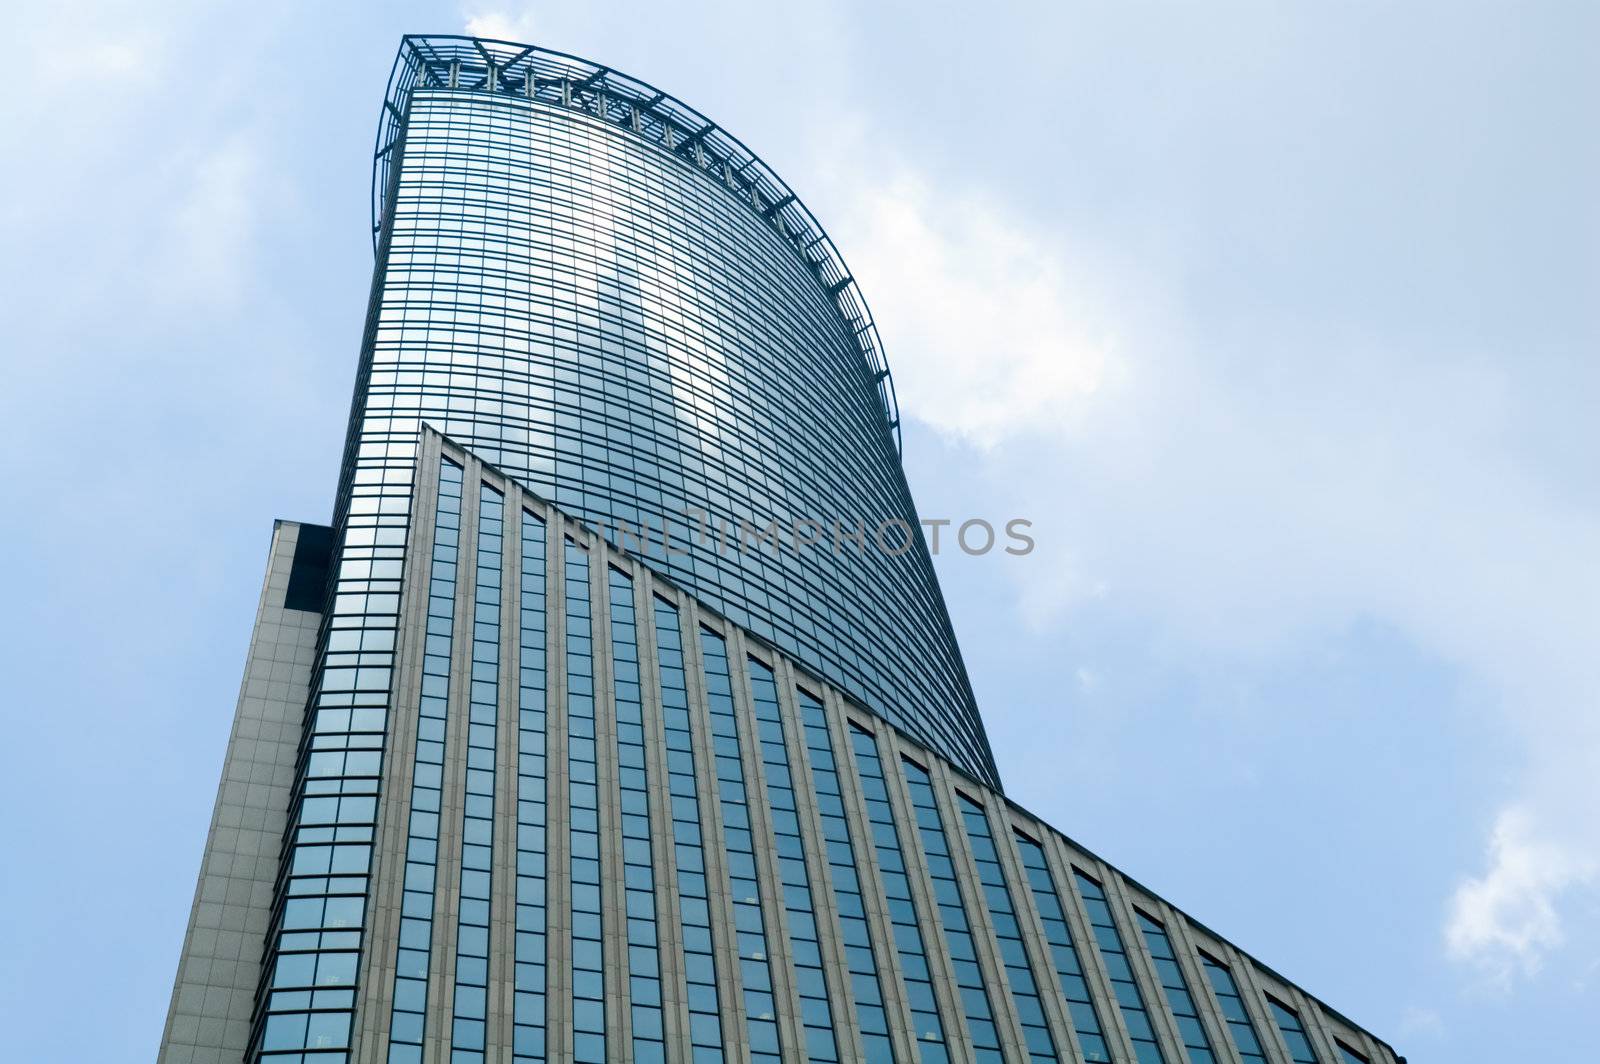 The external of skyscraper over blue sky